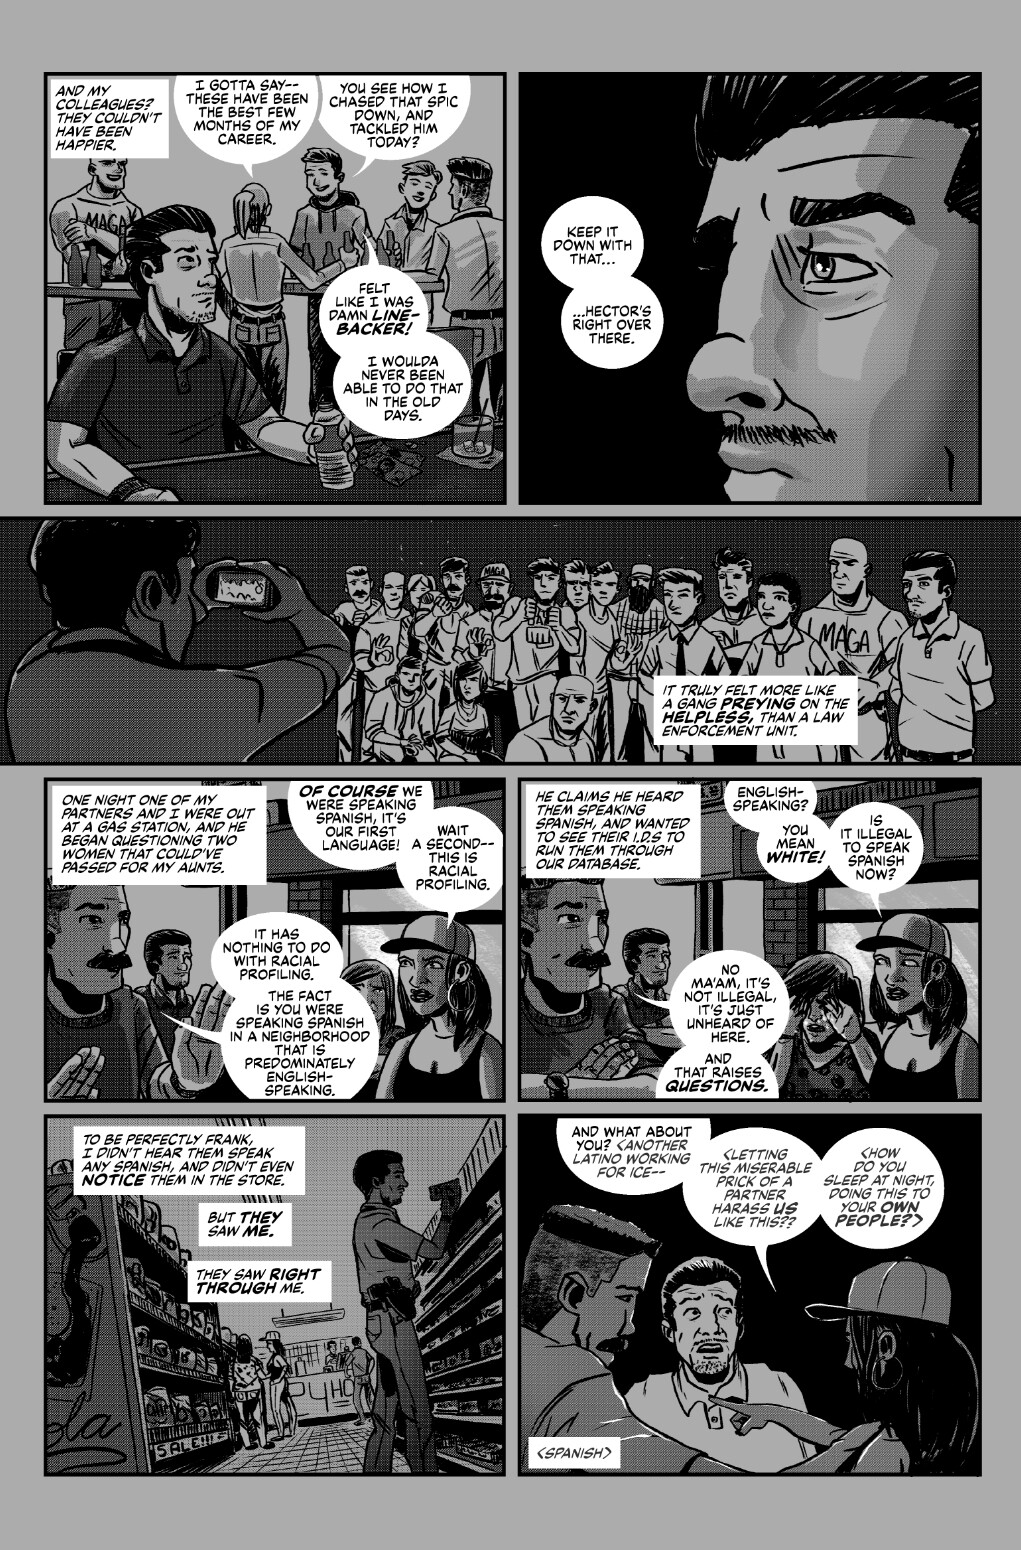 Sincerely, Agent Mejía: Page 5